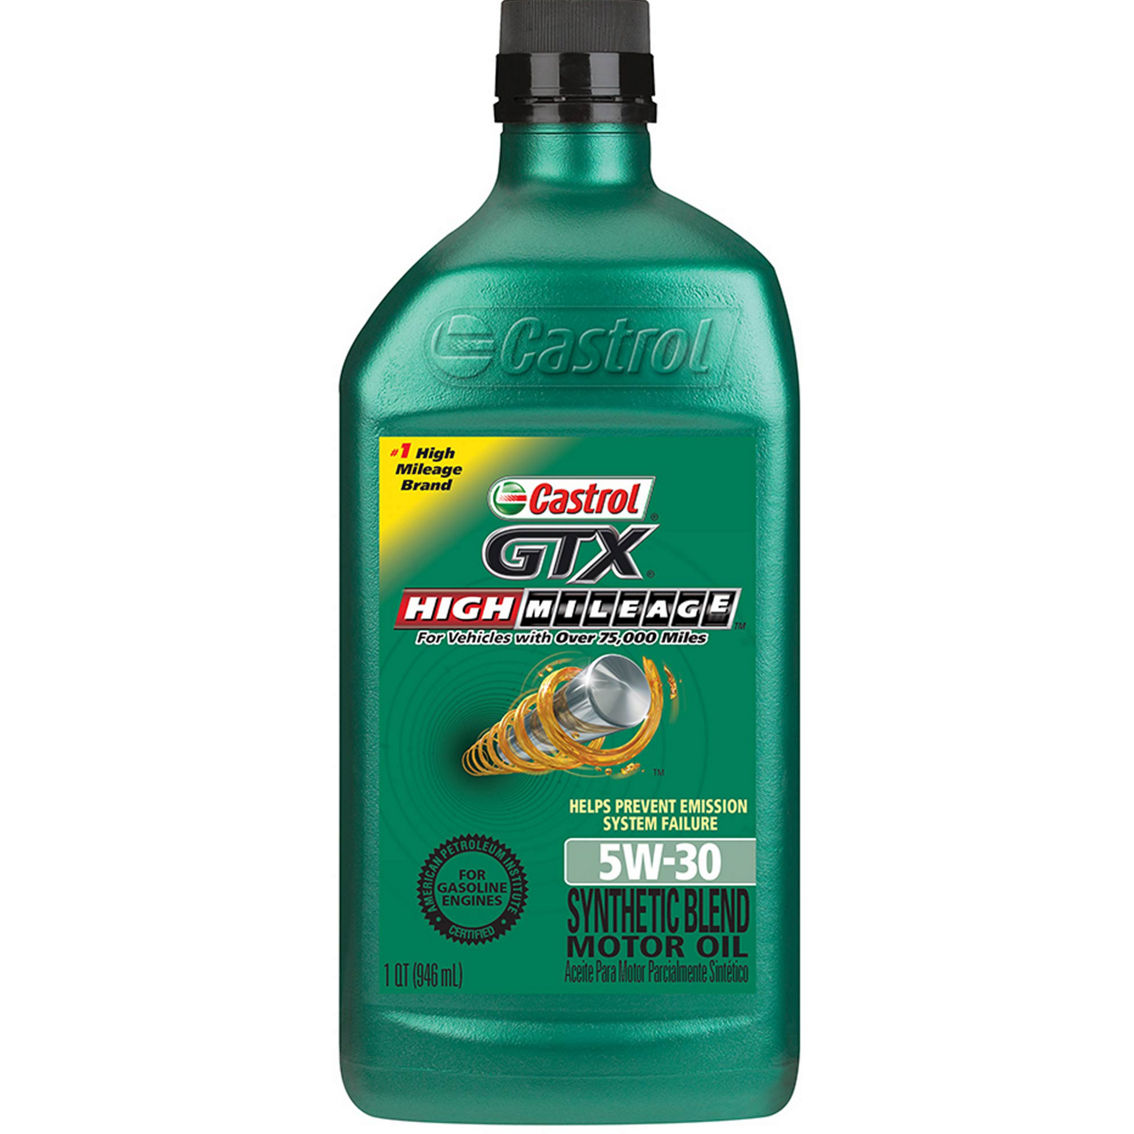 Castrol GTX High Mileage 5W-30 Synthetic Blend Motor Oil, 5 Quarts